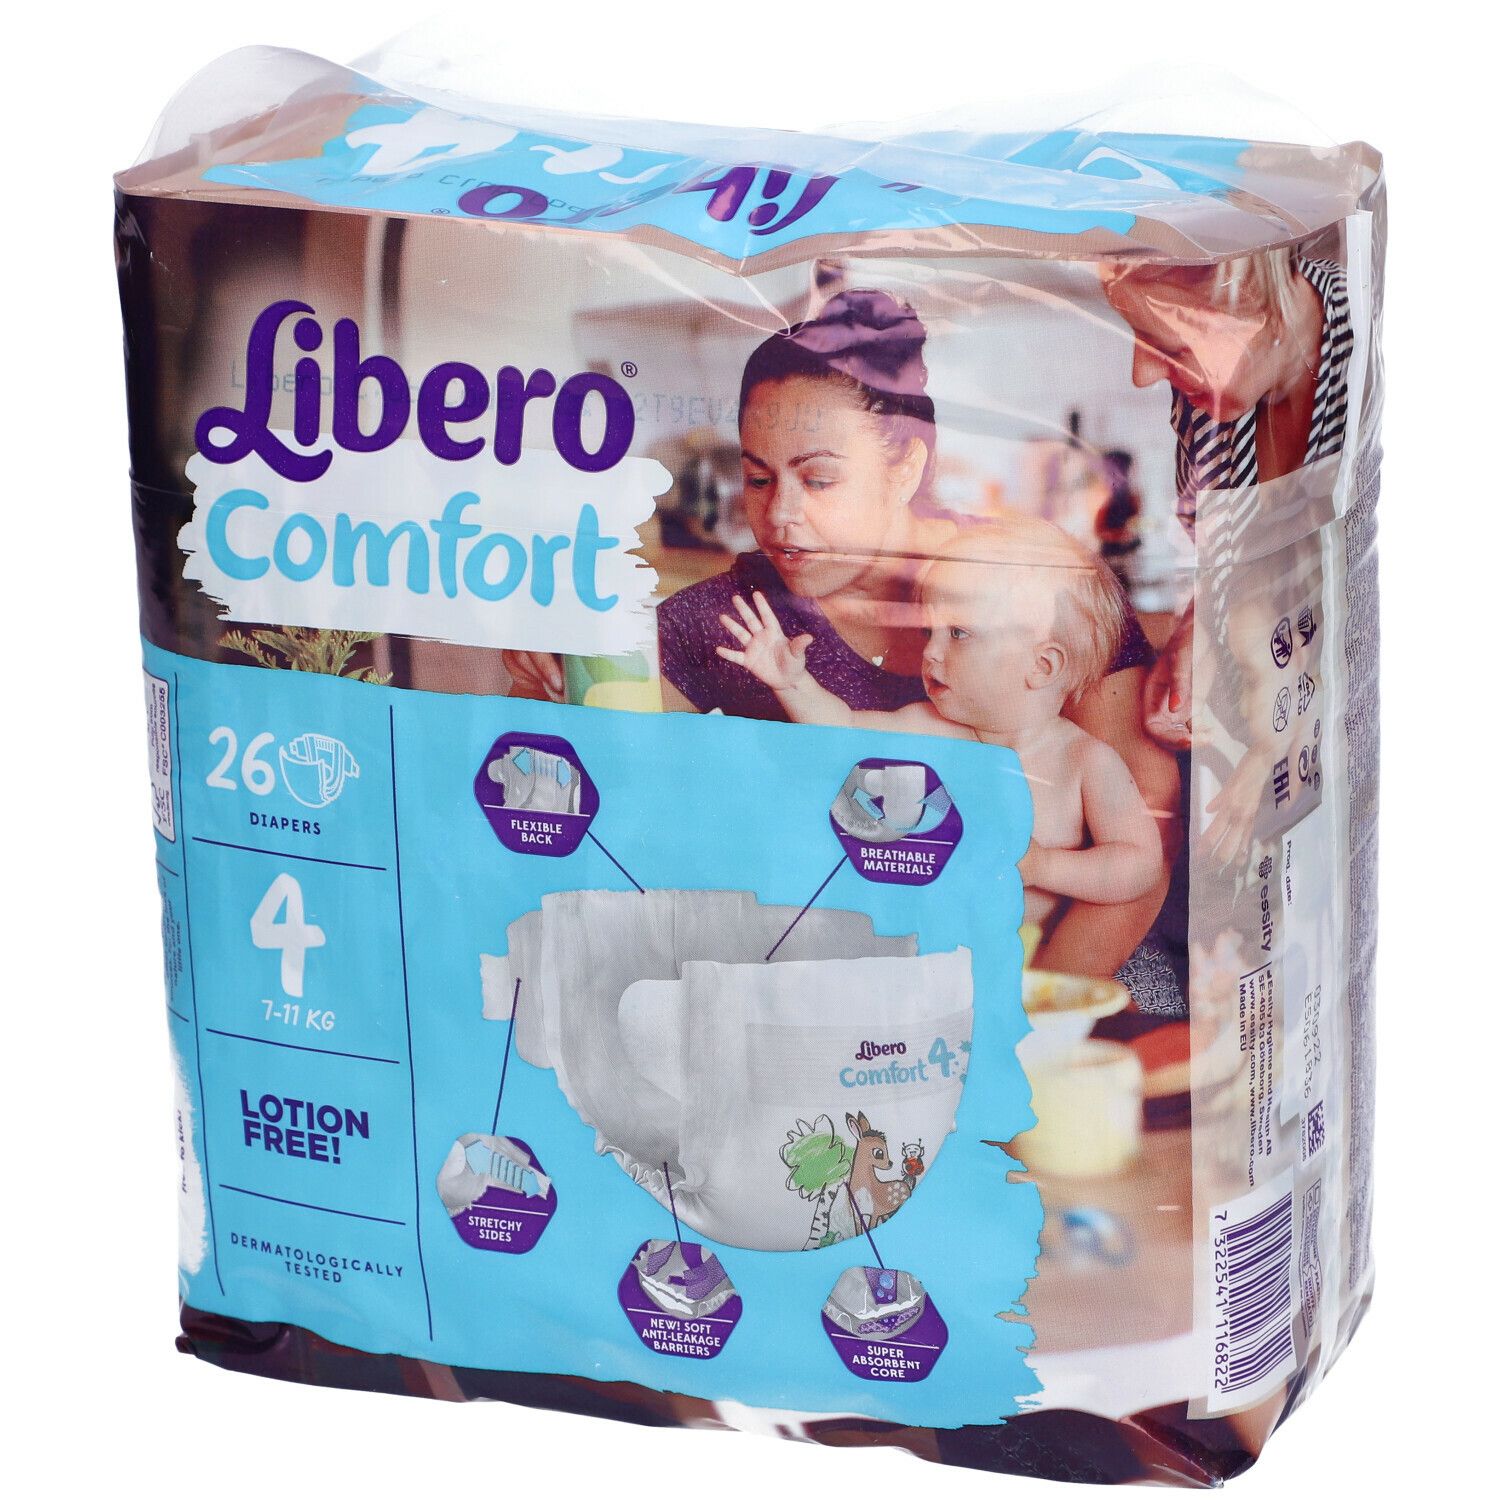 Image of Libero Comfort 4 Pannolino Per Bambino 7-11kg